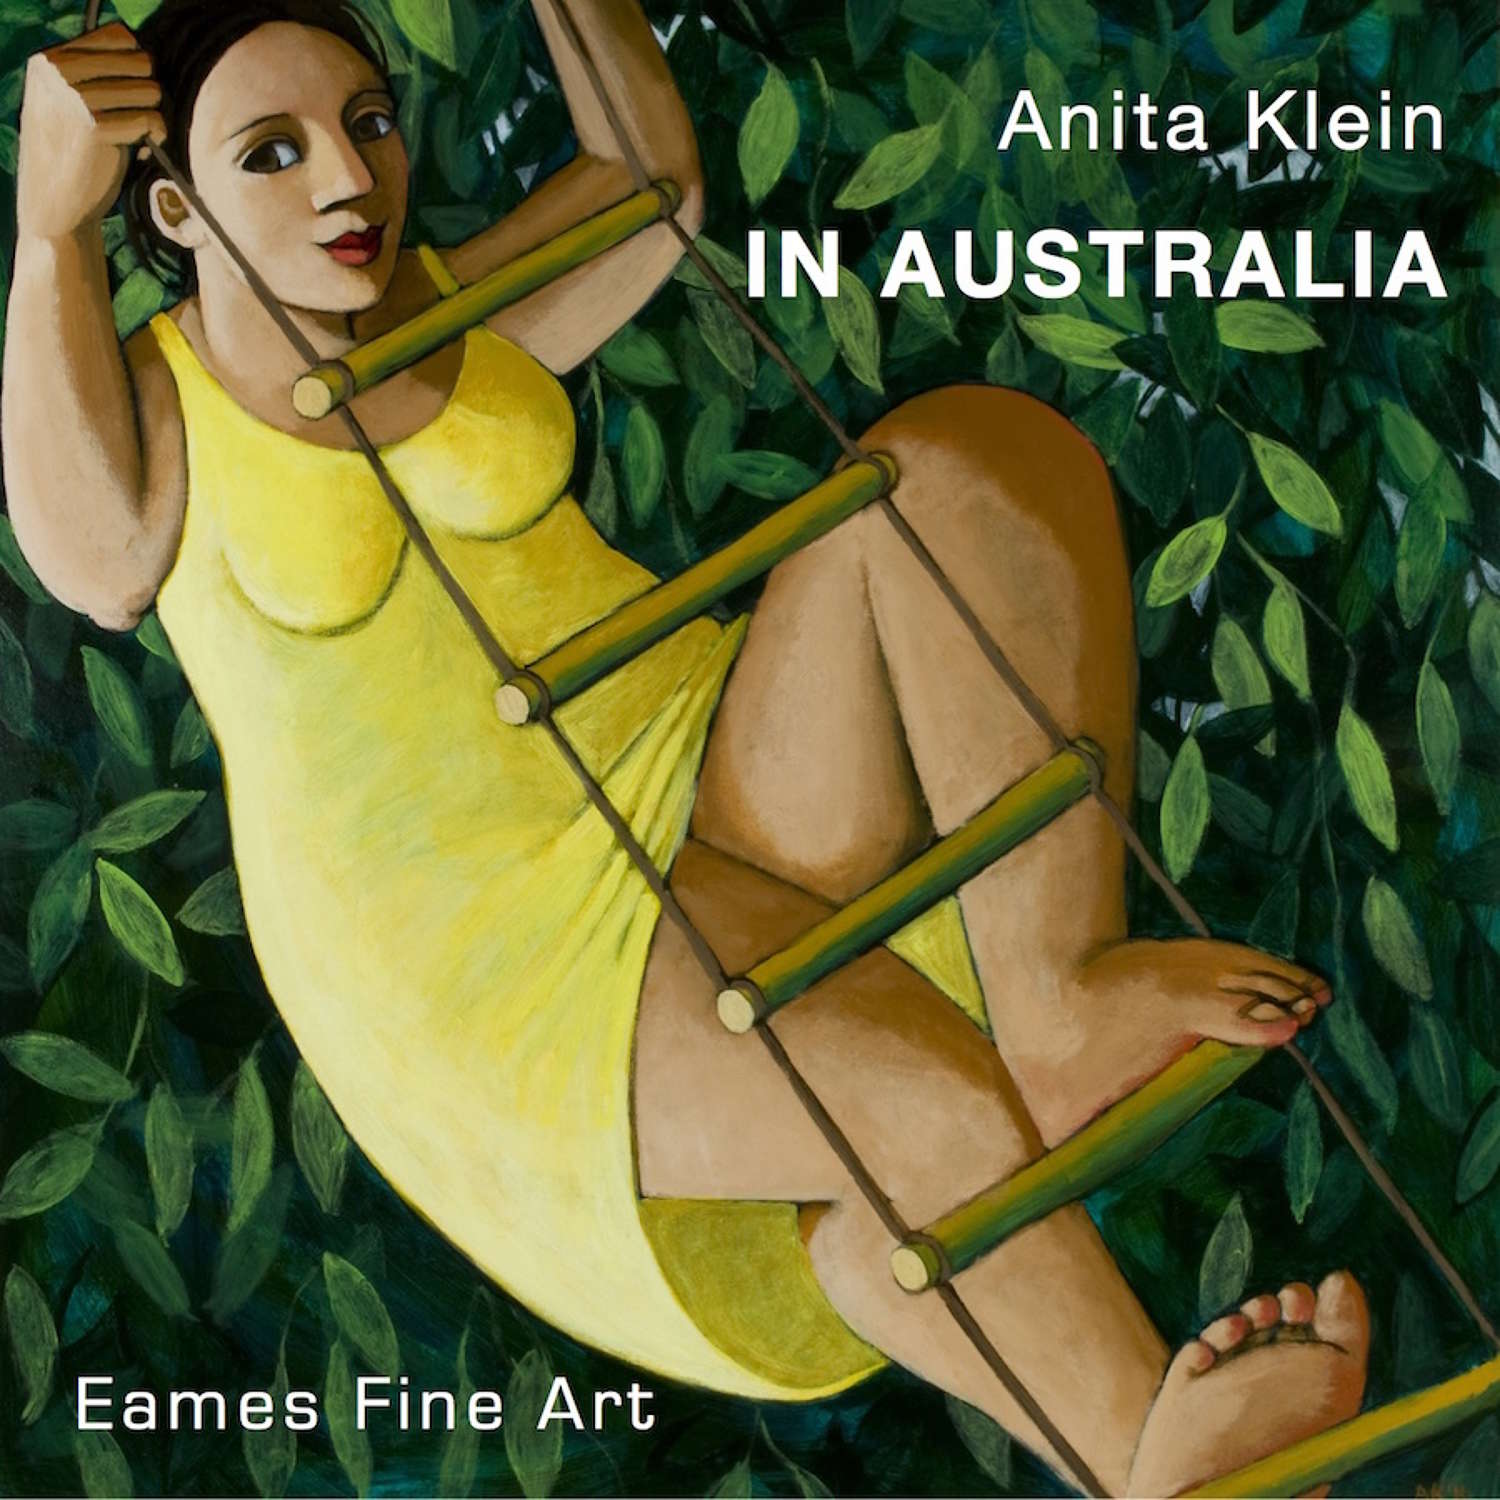 'In Australia' exhibition catalogue